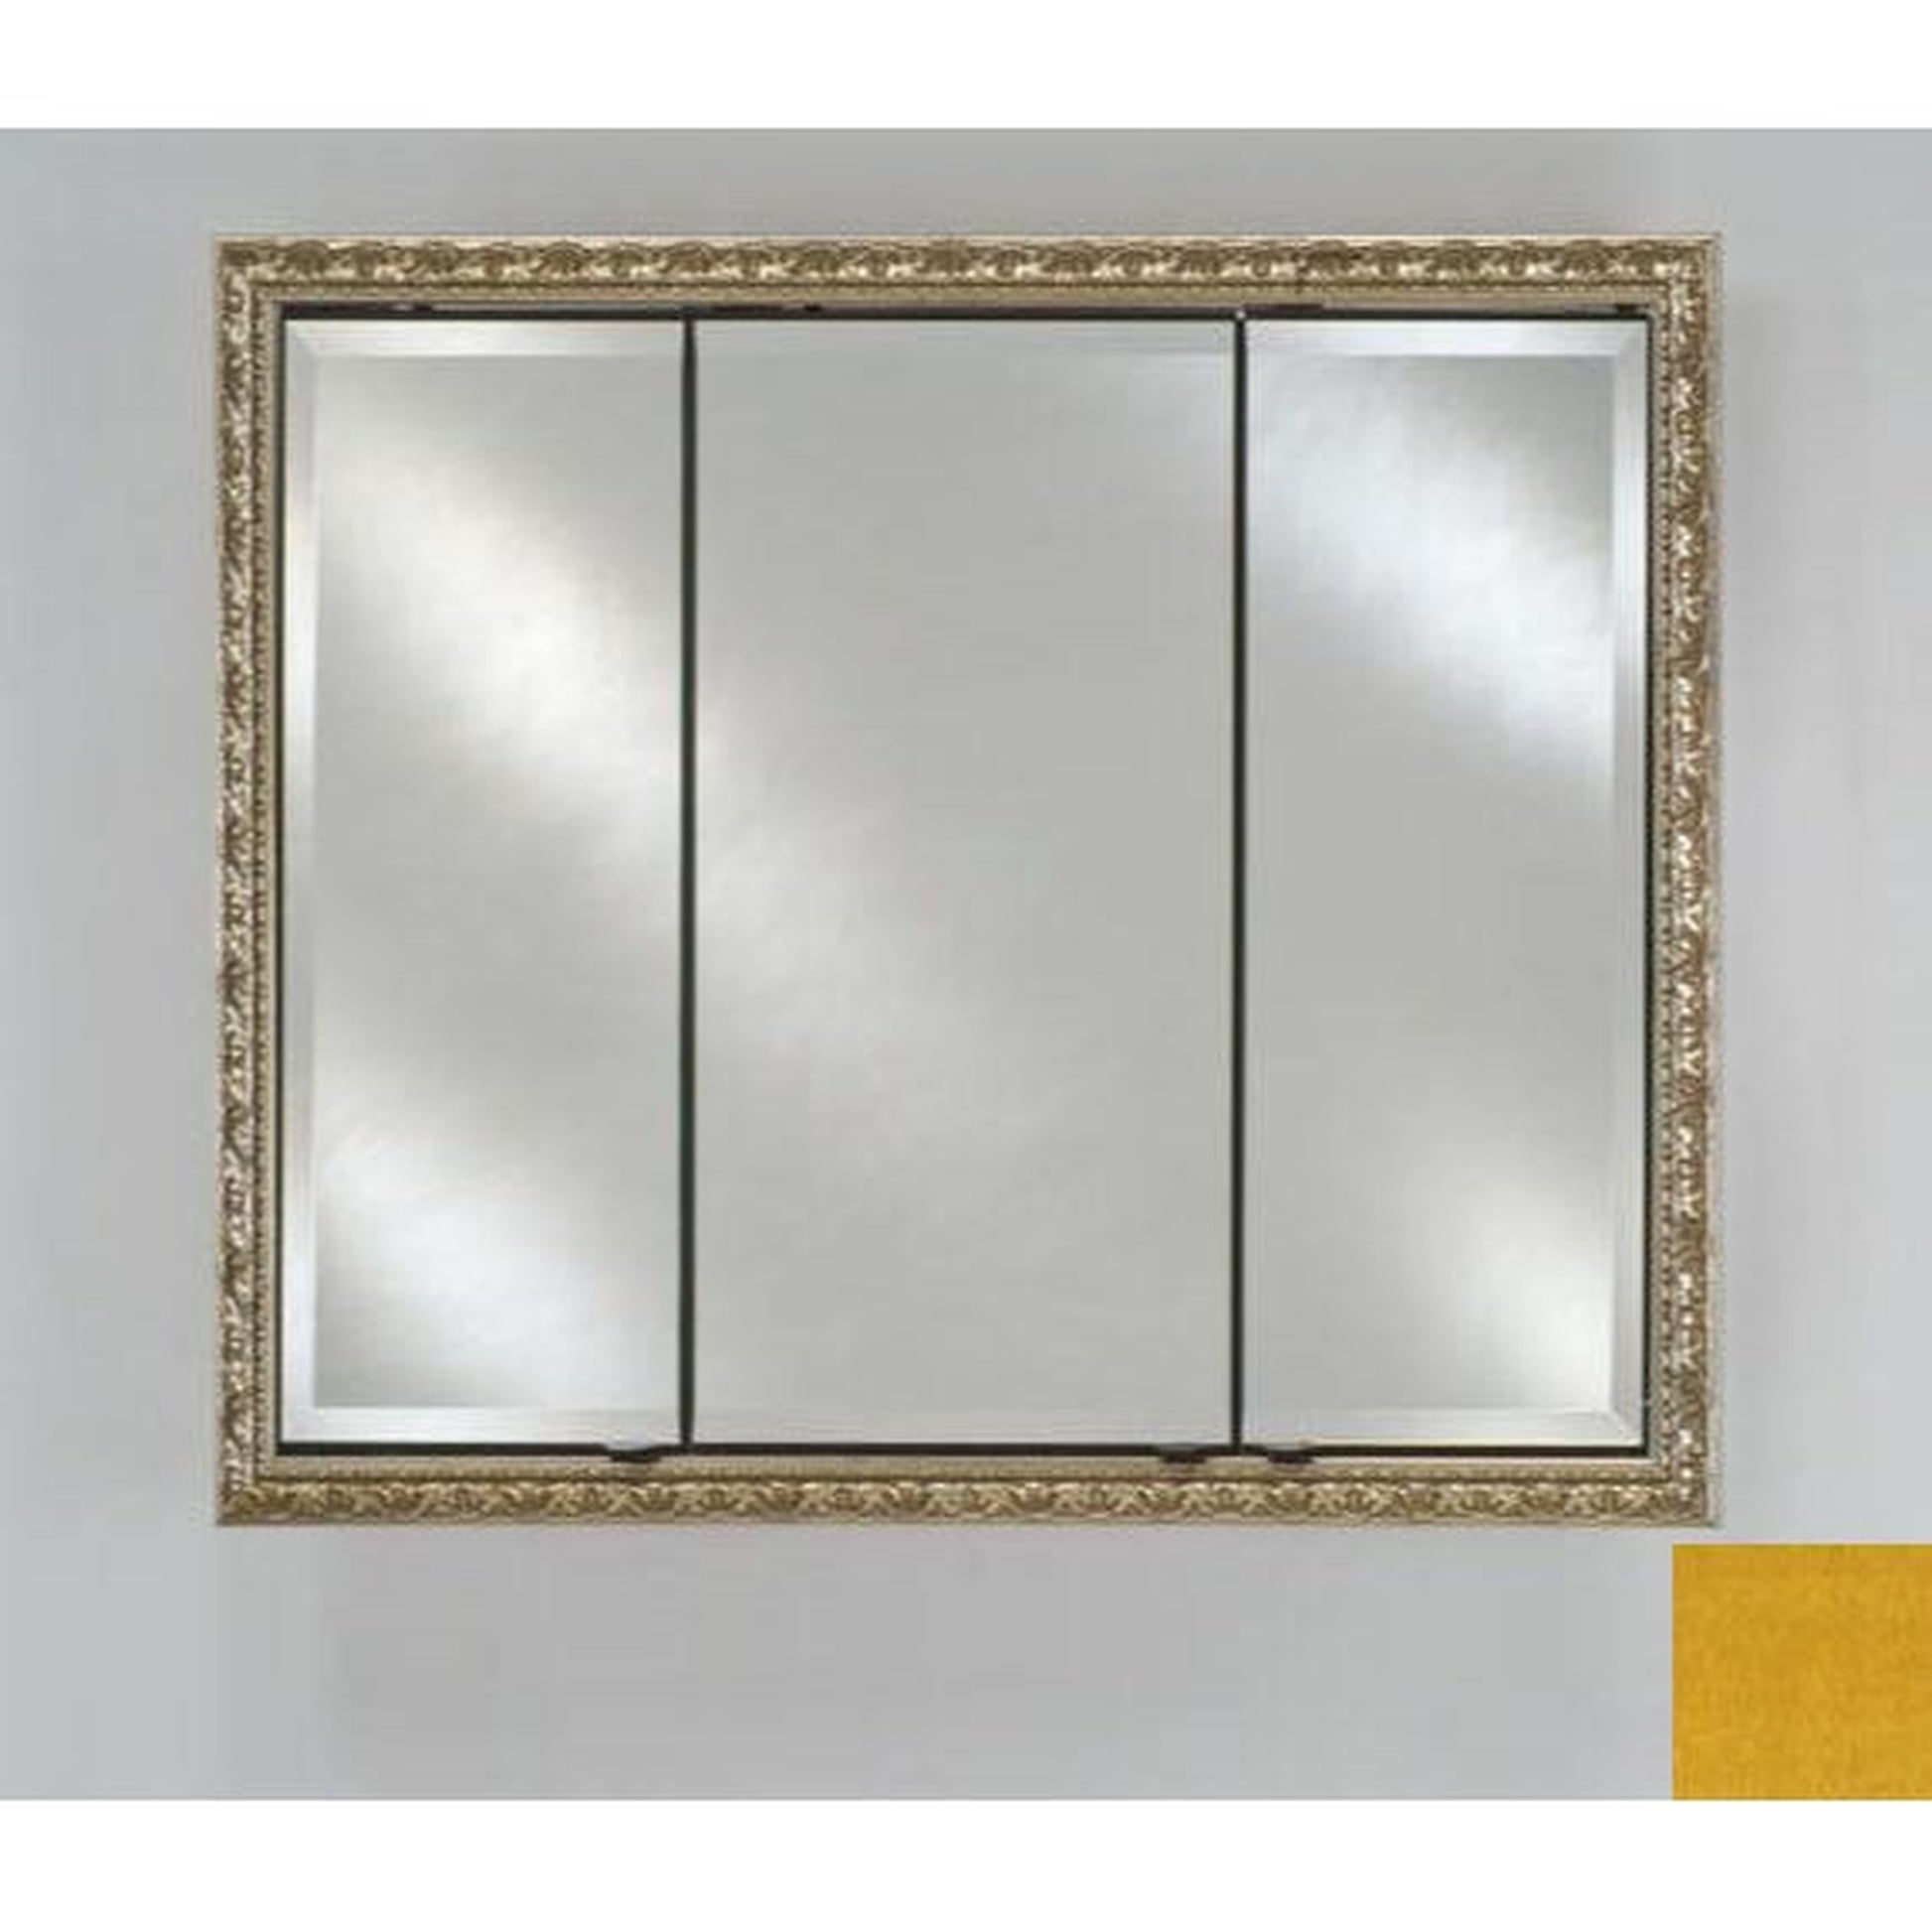 Afina Signature 44" x 30" Colorgrain Yellow Recessed Triple Door Medicine Cabinet With Beveled Edge Mirror